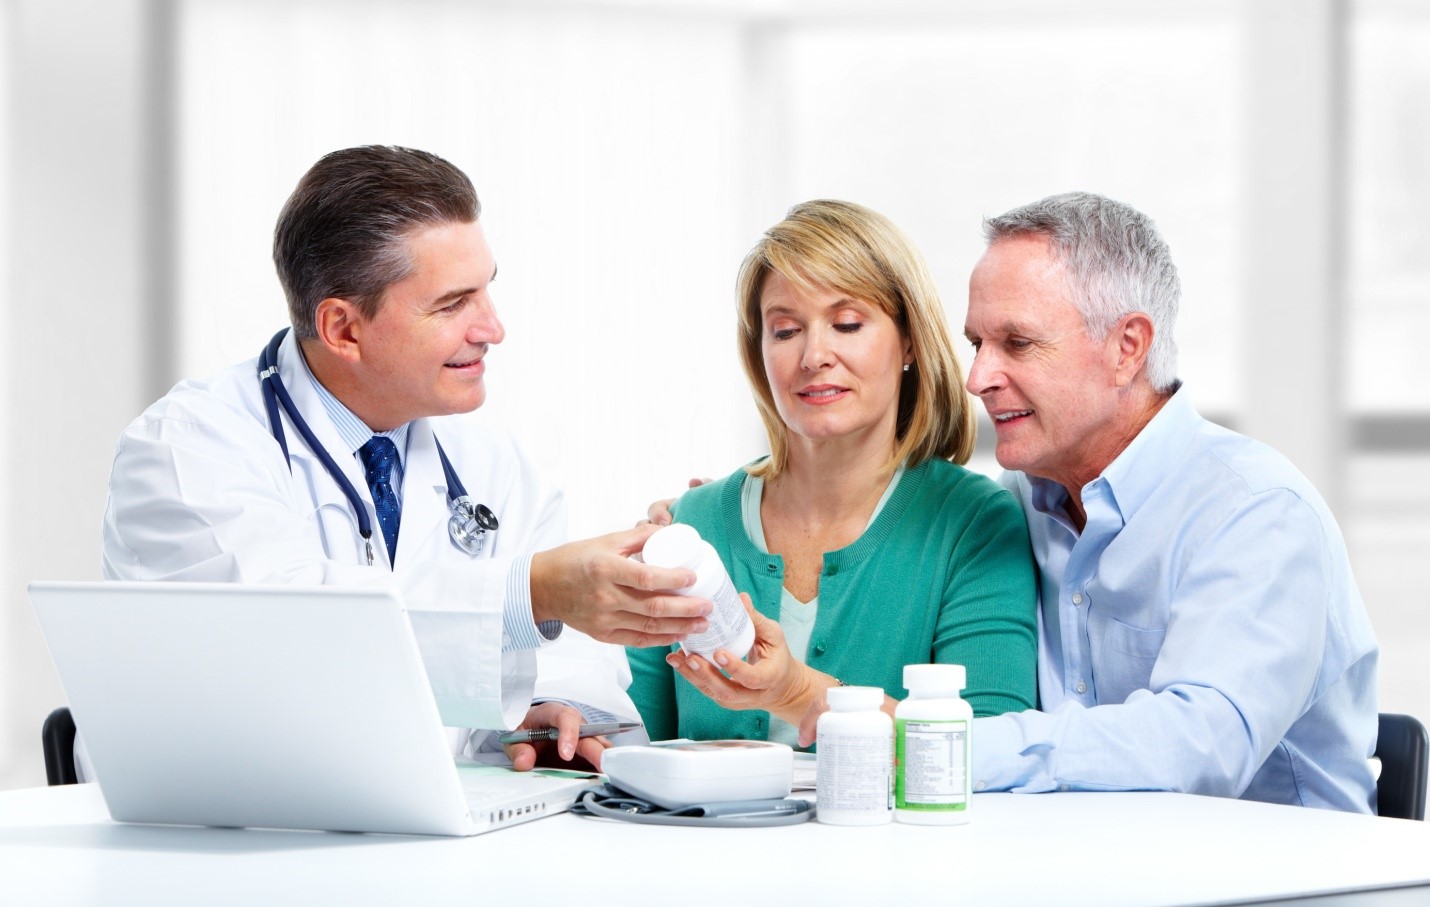 Carefirst bluecross blueshield preferred drug list availity physician portal